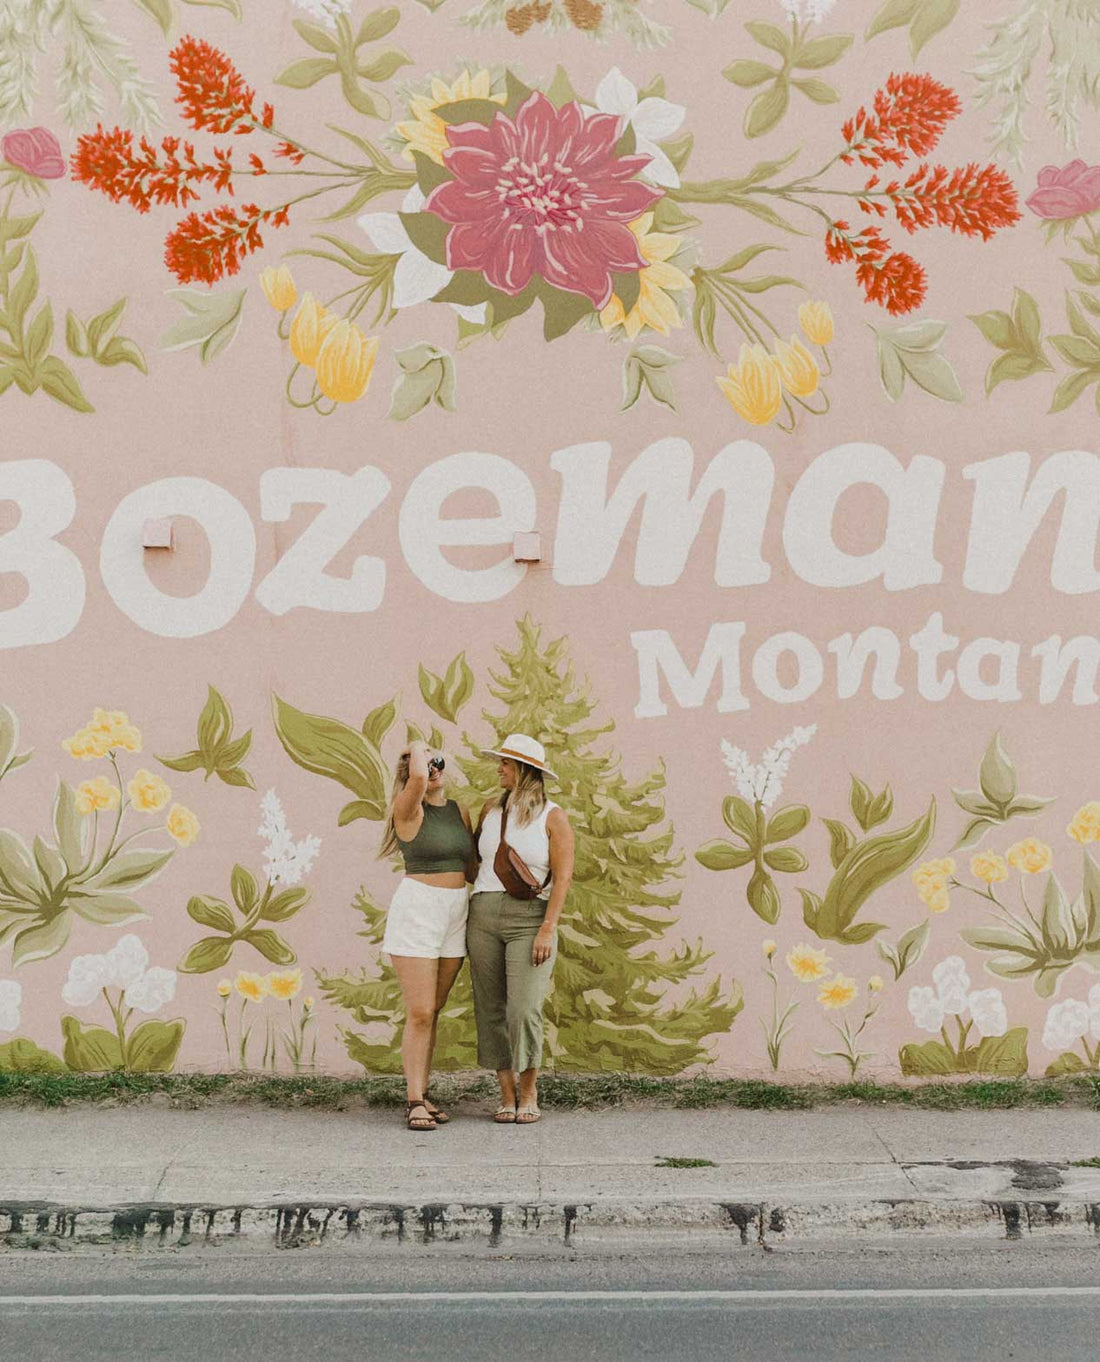 We're headed to Bozeman, Montana!